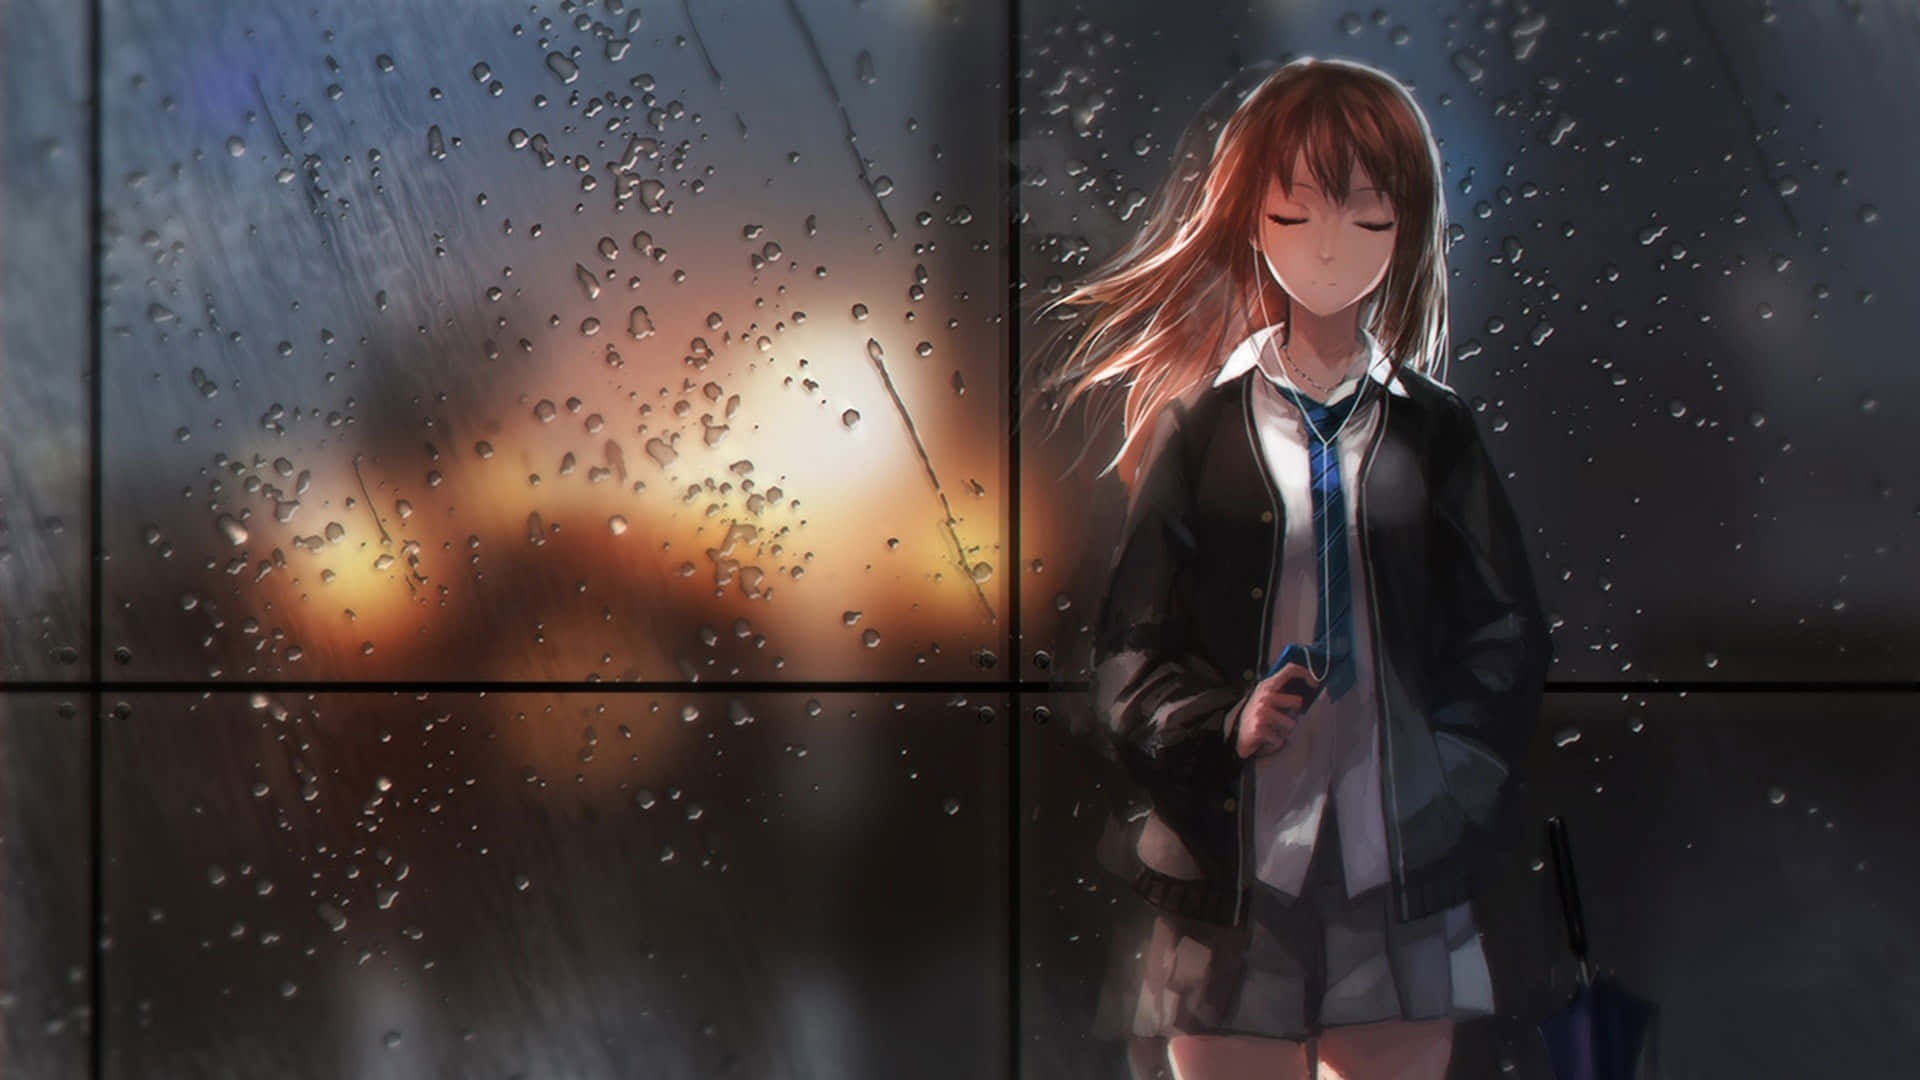 Lo Fi Anime Chill Girl Standing In Rain Wallpaper